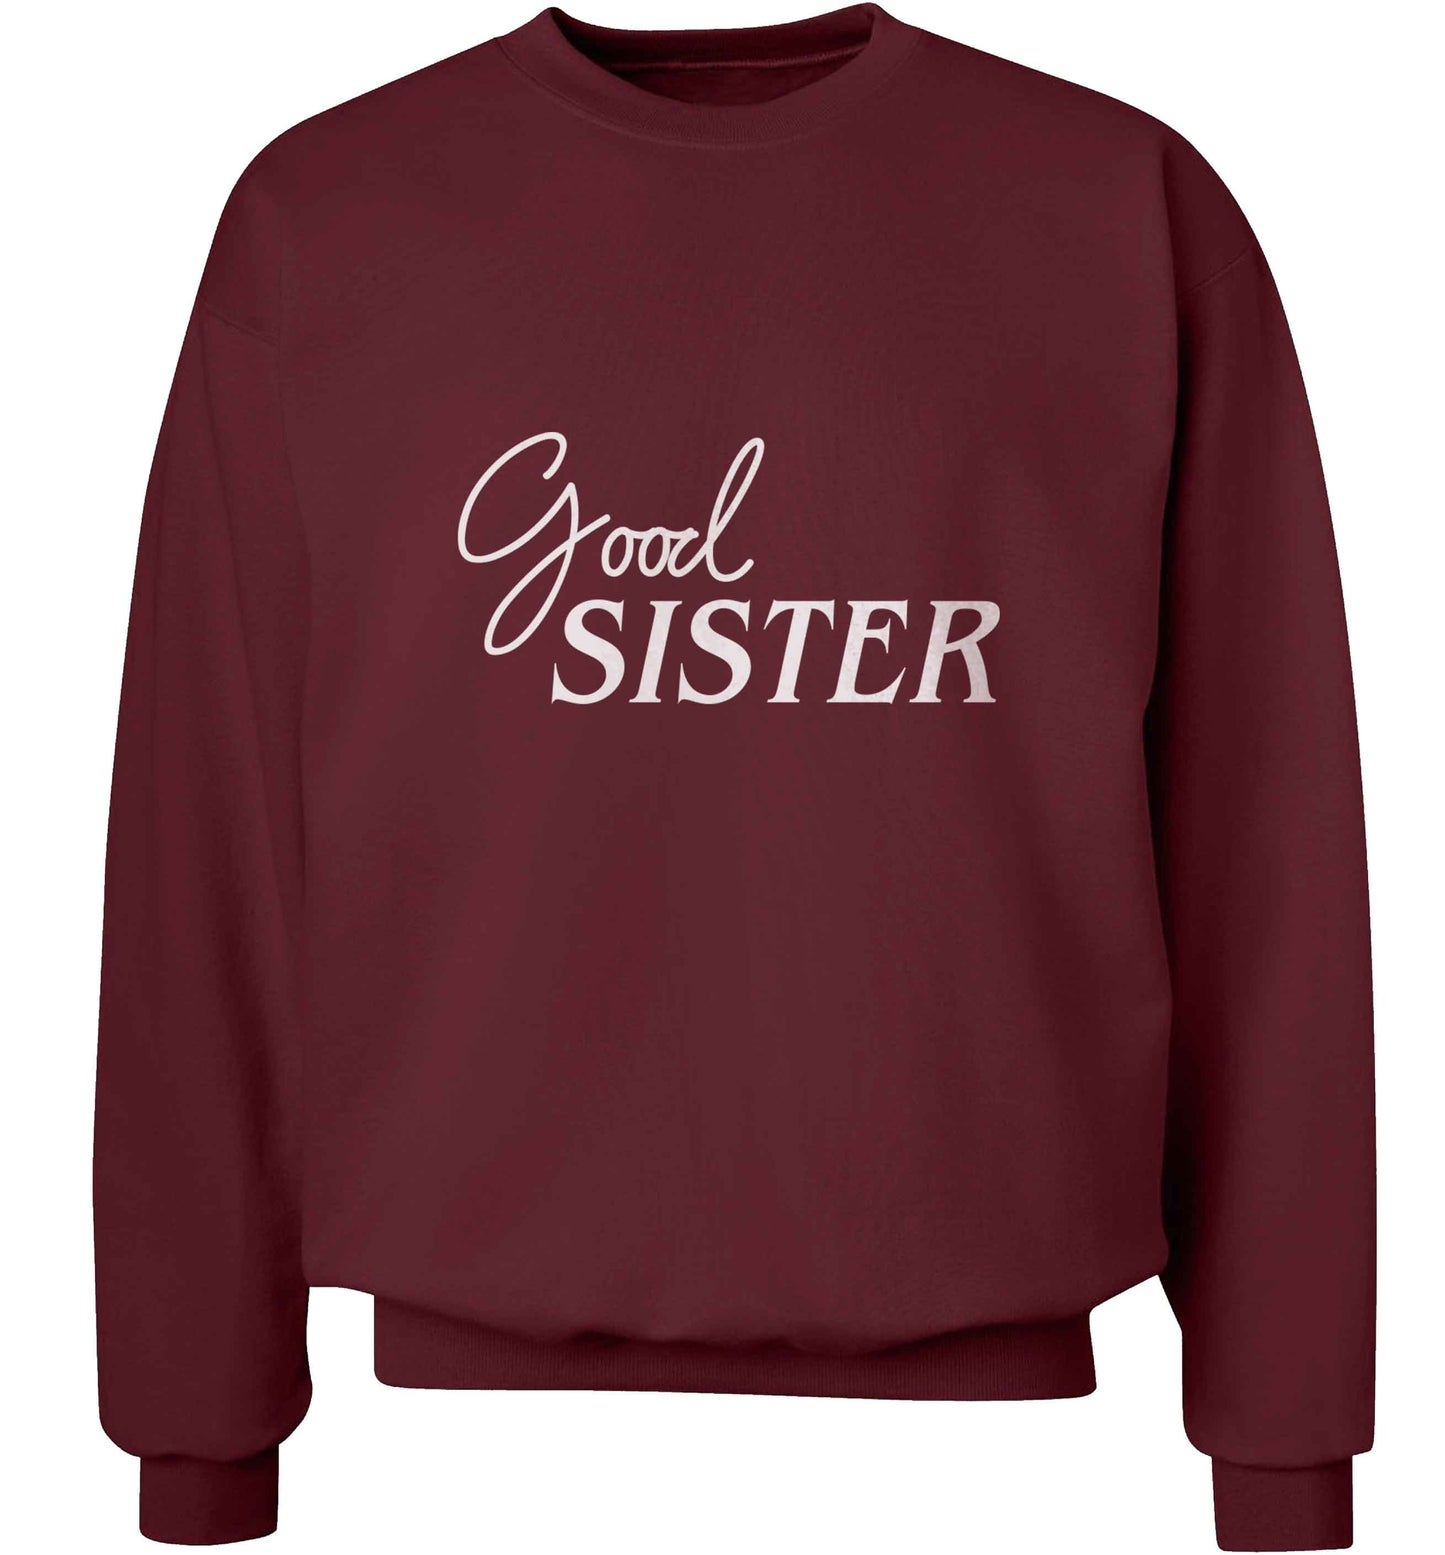 Good sister adult's unisex maroon sweater 2XL